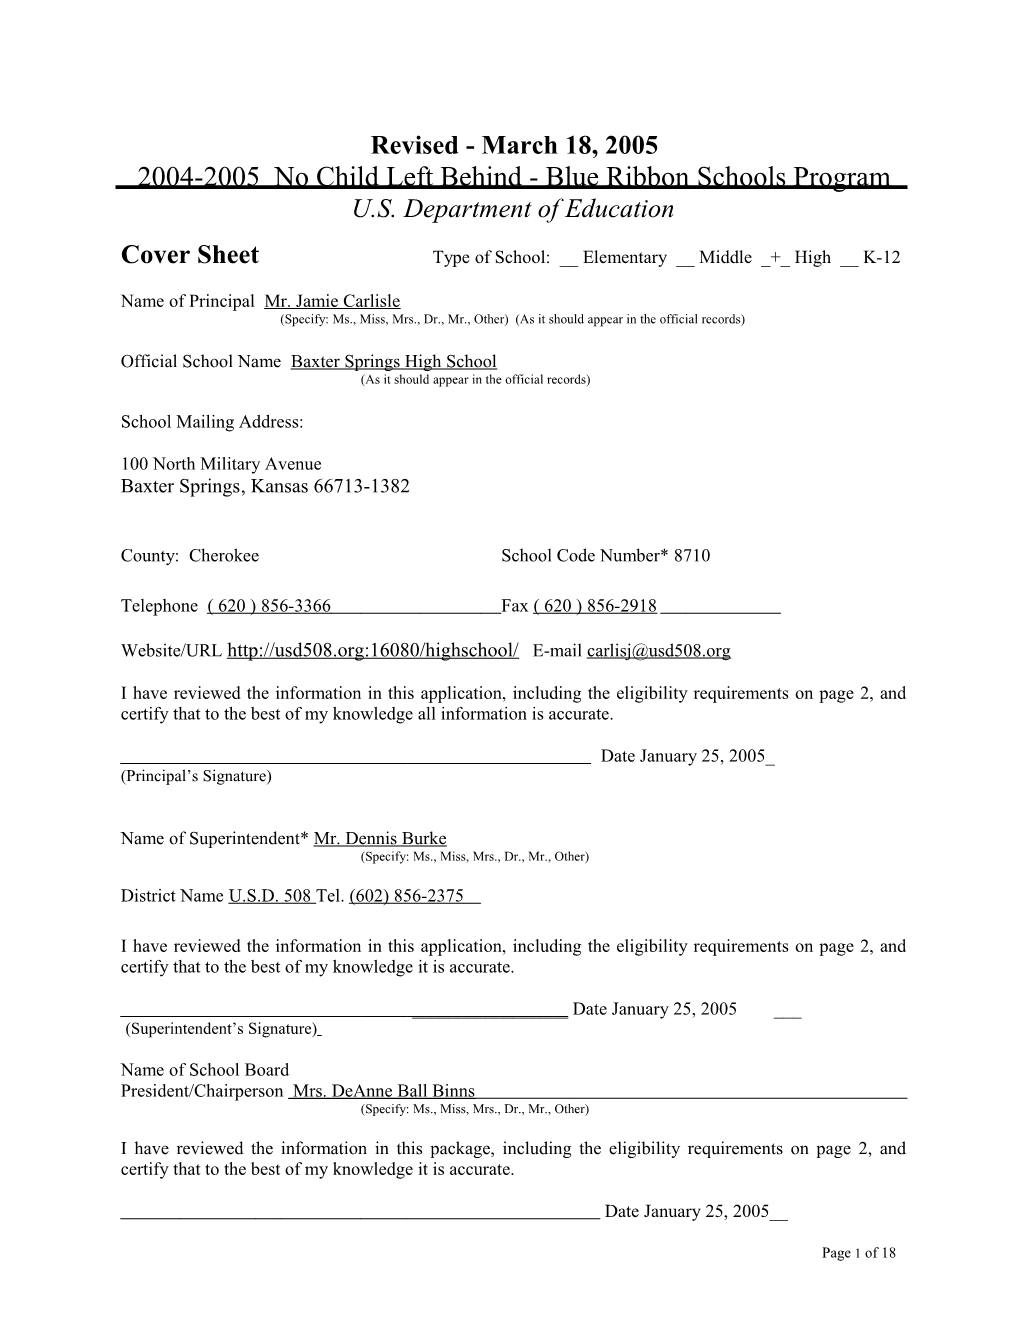 Baxter Springs High School Application: 2004-2005, No Child Left Behind - Blue Ribbon Schools